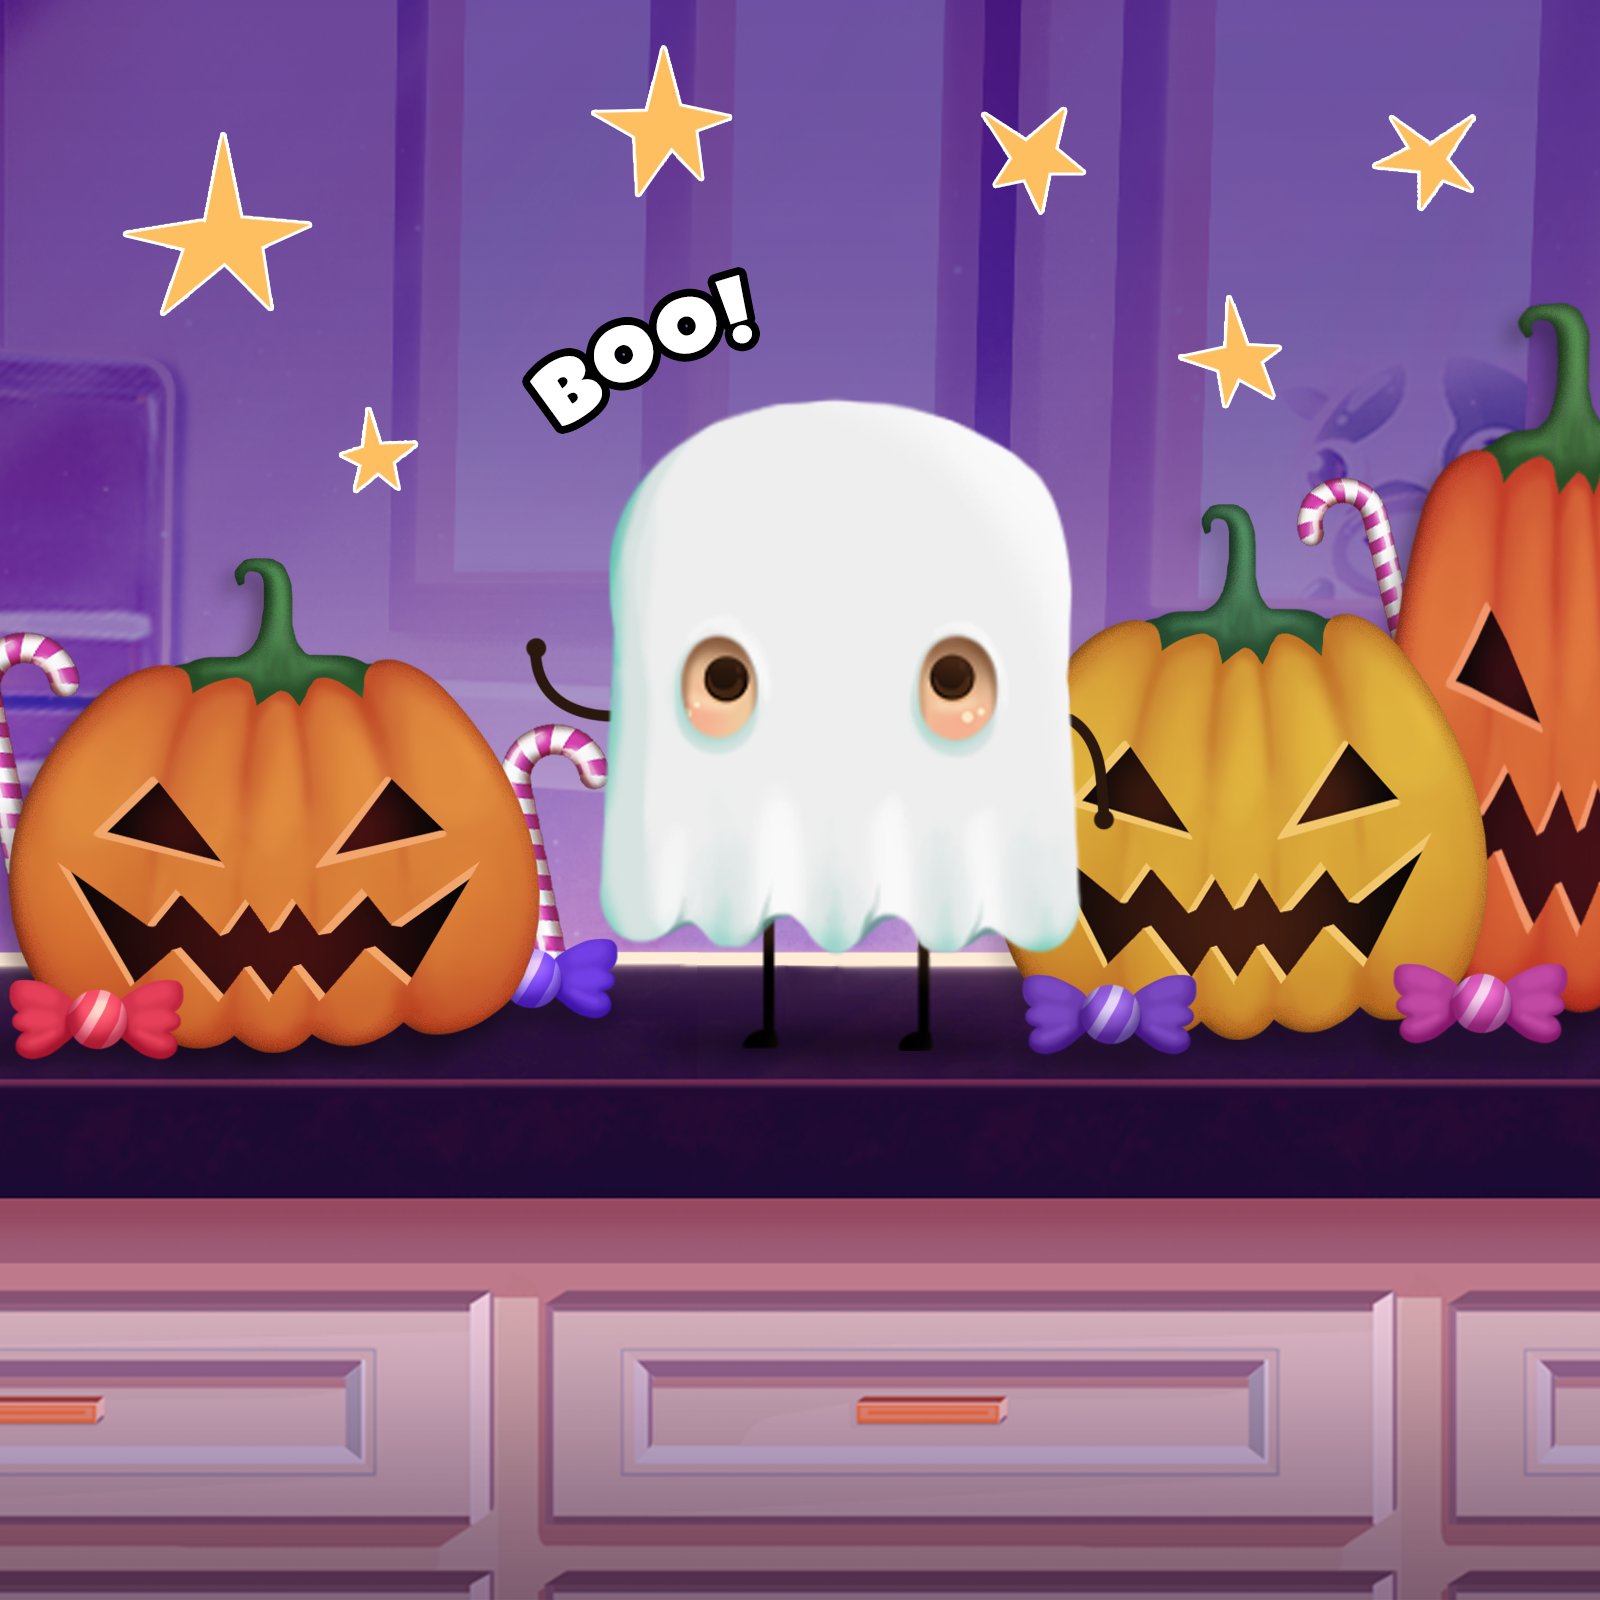 Melhores jogos de terror para o Halloween - Canaltech